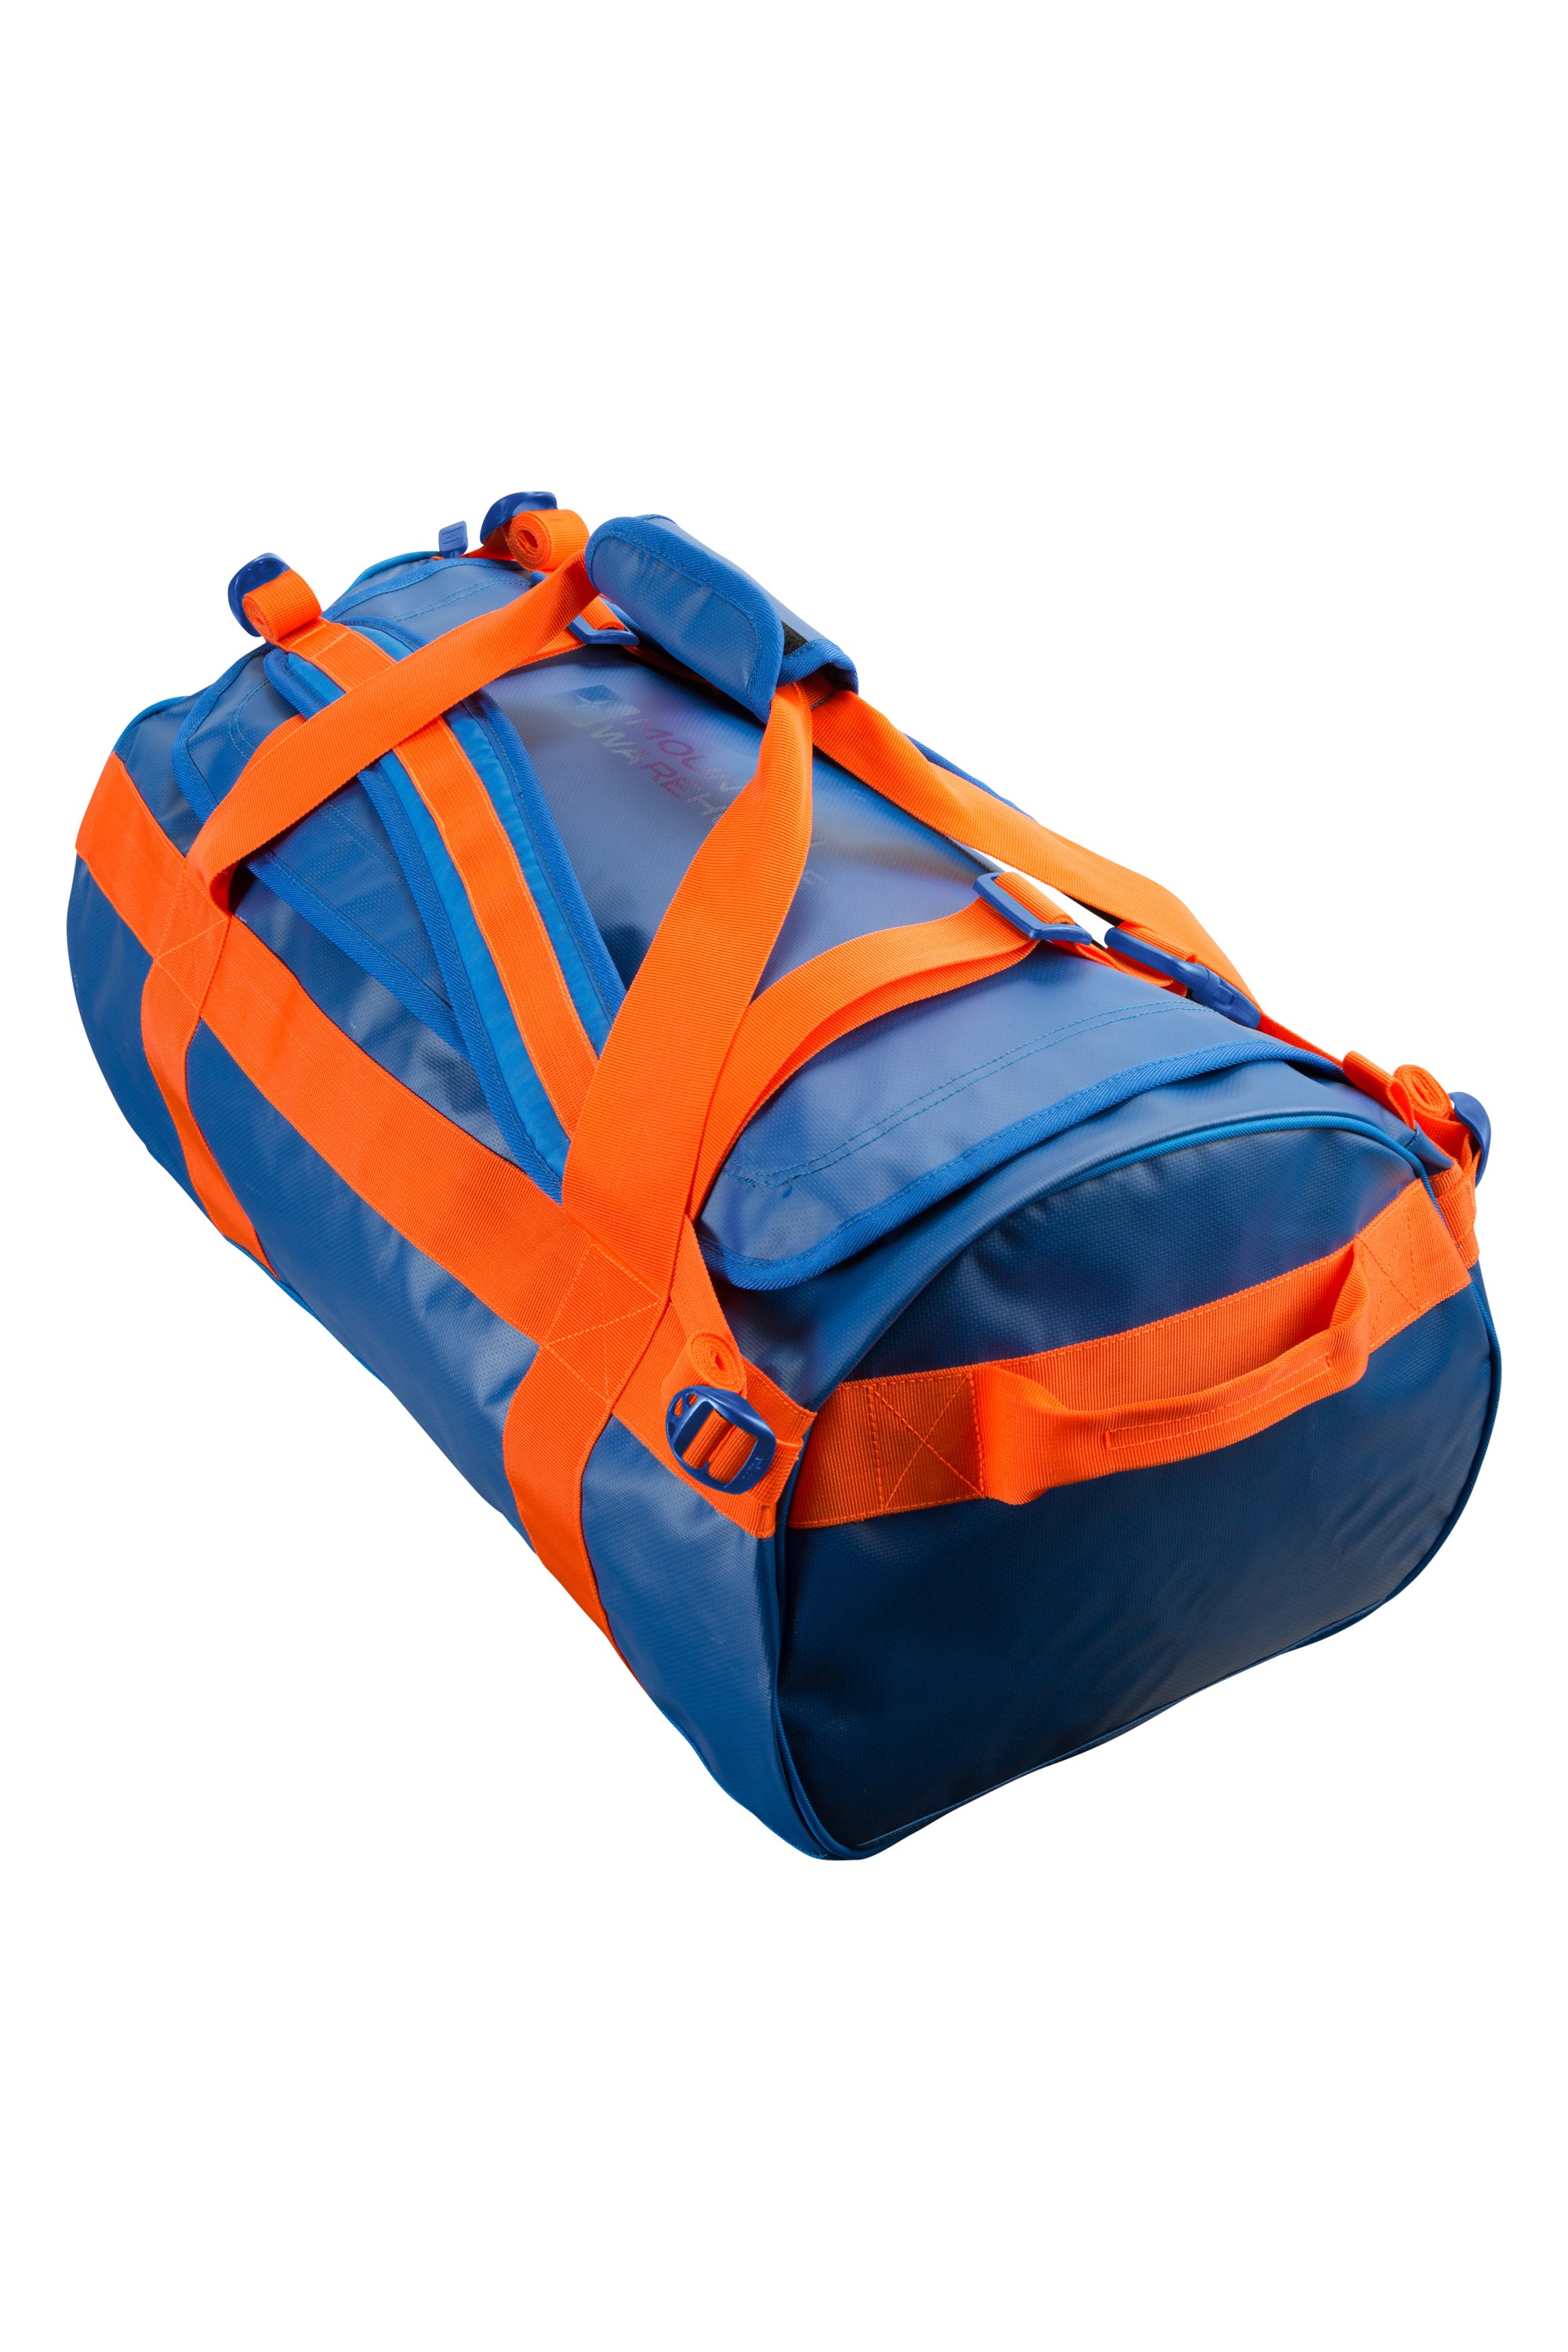 Mountain Warehouse Packaway Duffle Bag 60L Travel Bag Lockable Zips Cargo 